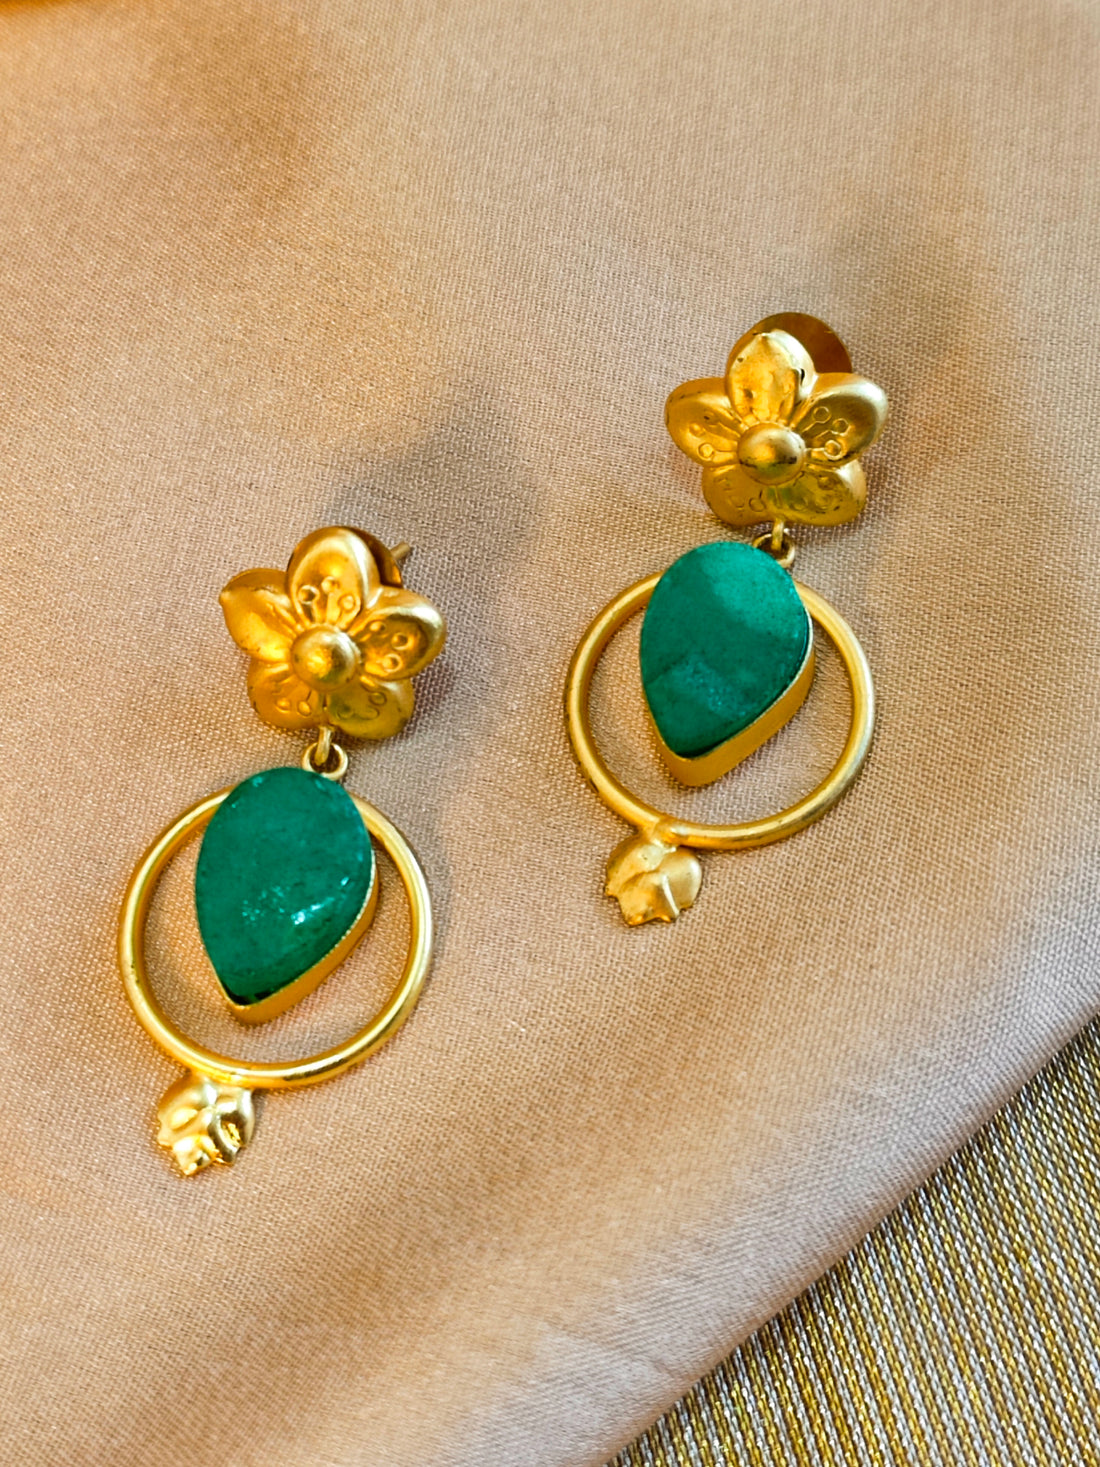 Mrigaya's Tapka Earring set - Green & Blue Stone